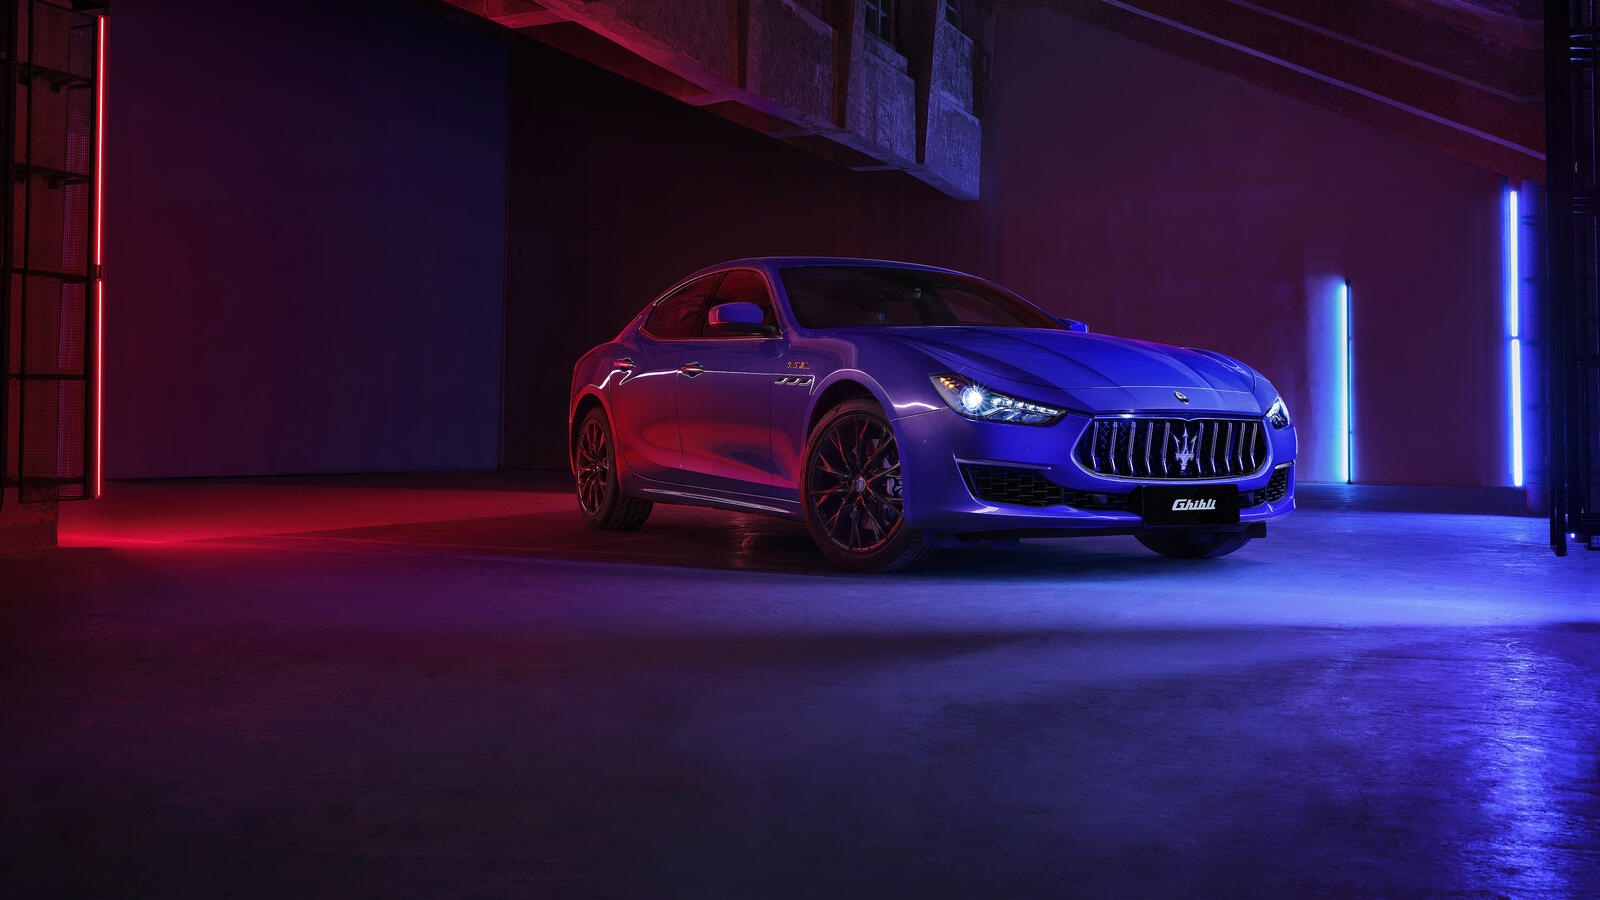 Wallpapers cars Maserati neon lights on the desktop